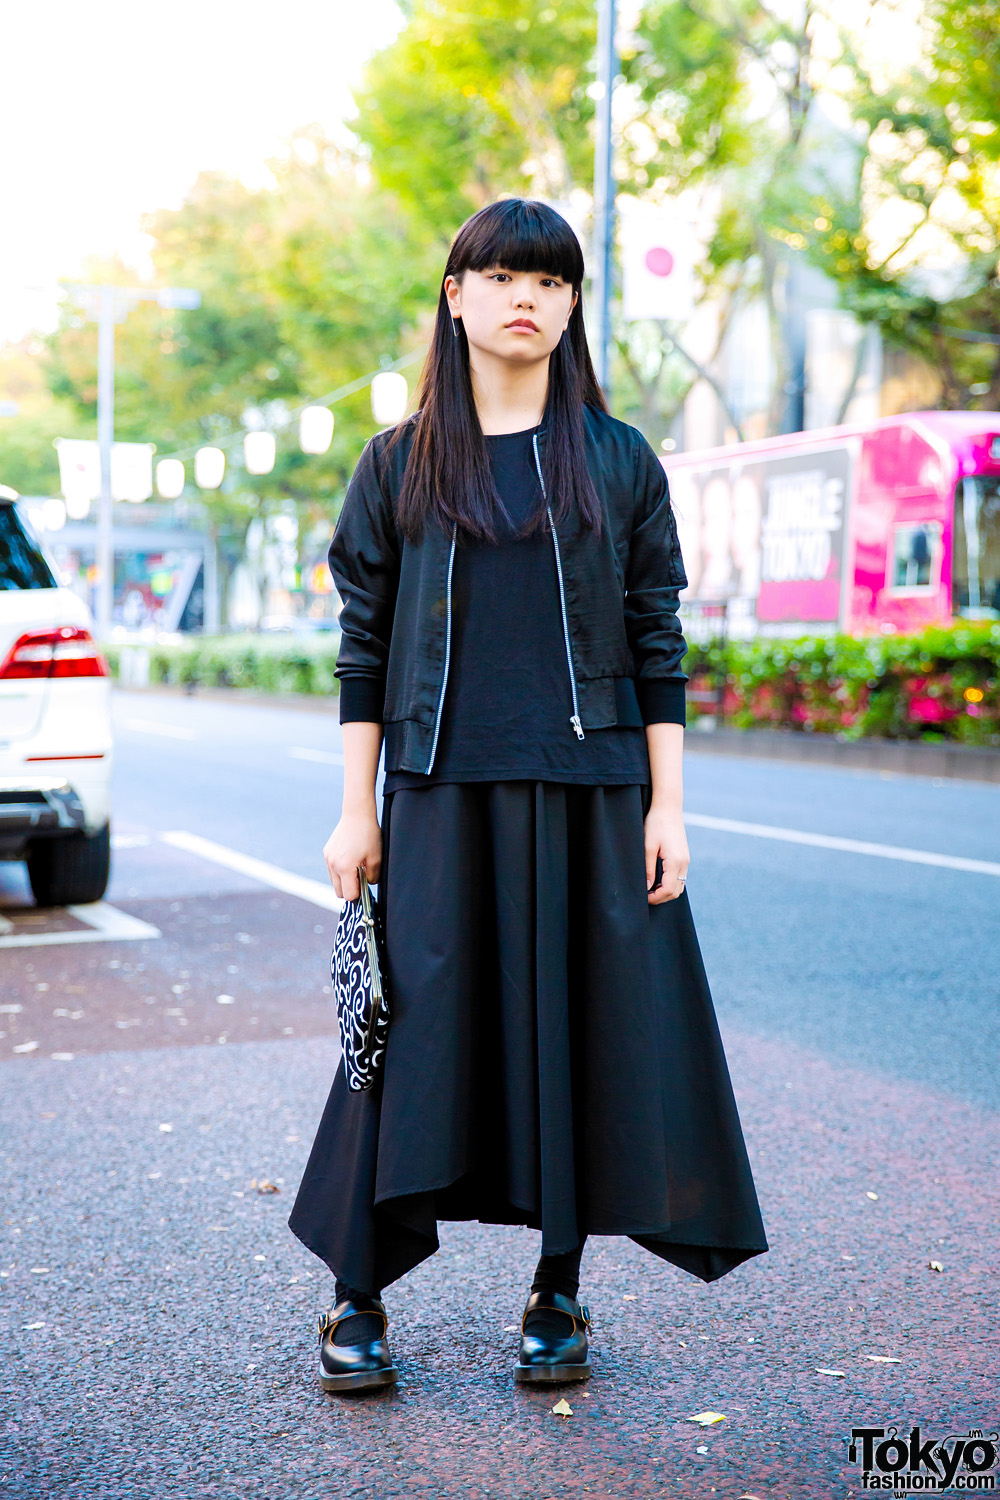 All Black Minimalist Street Style w/ Patterned Clutch, Heather Jacket ...